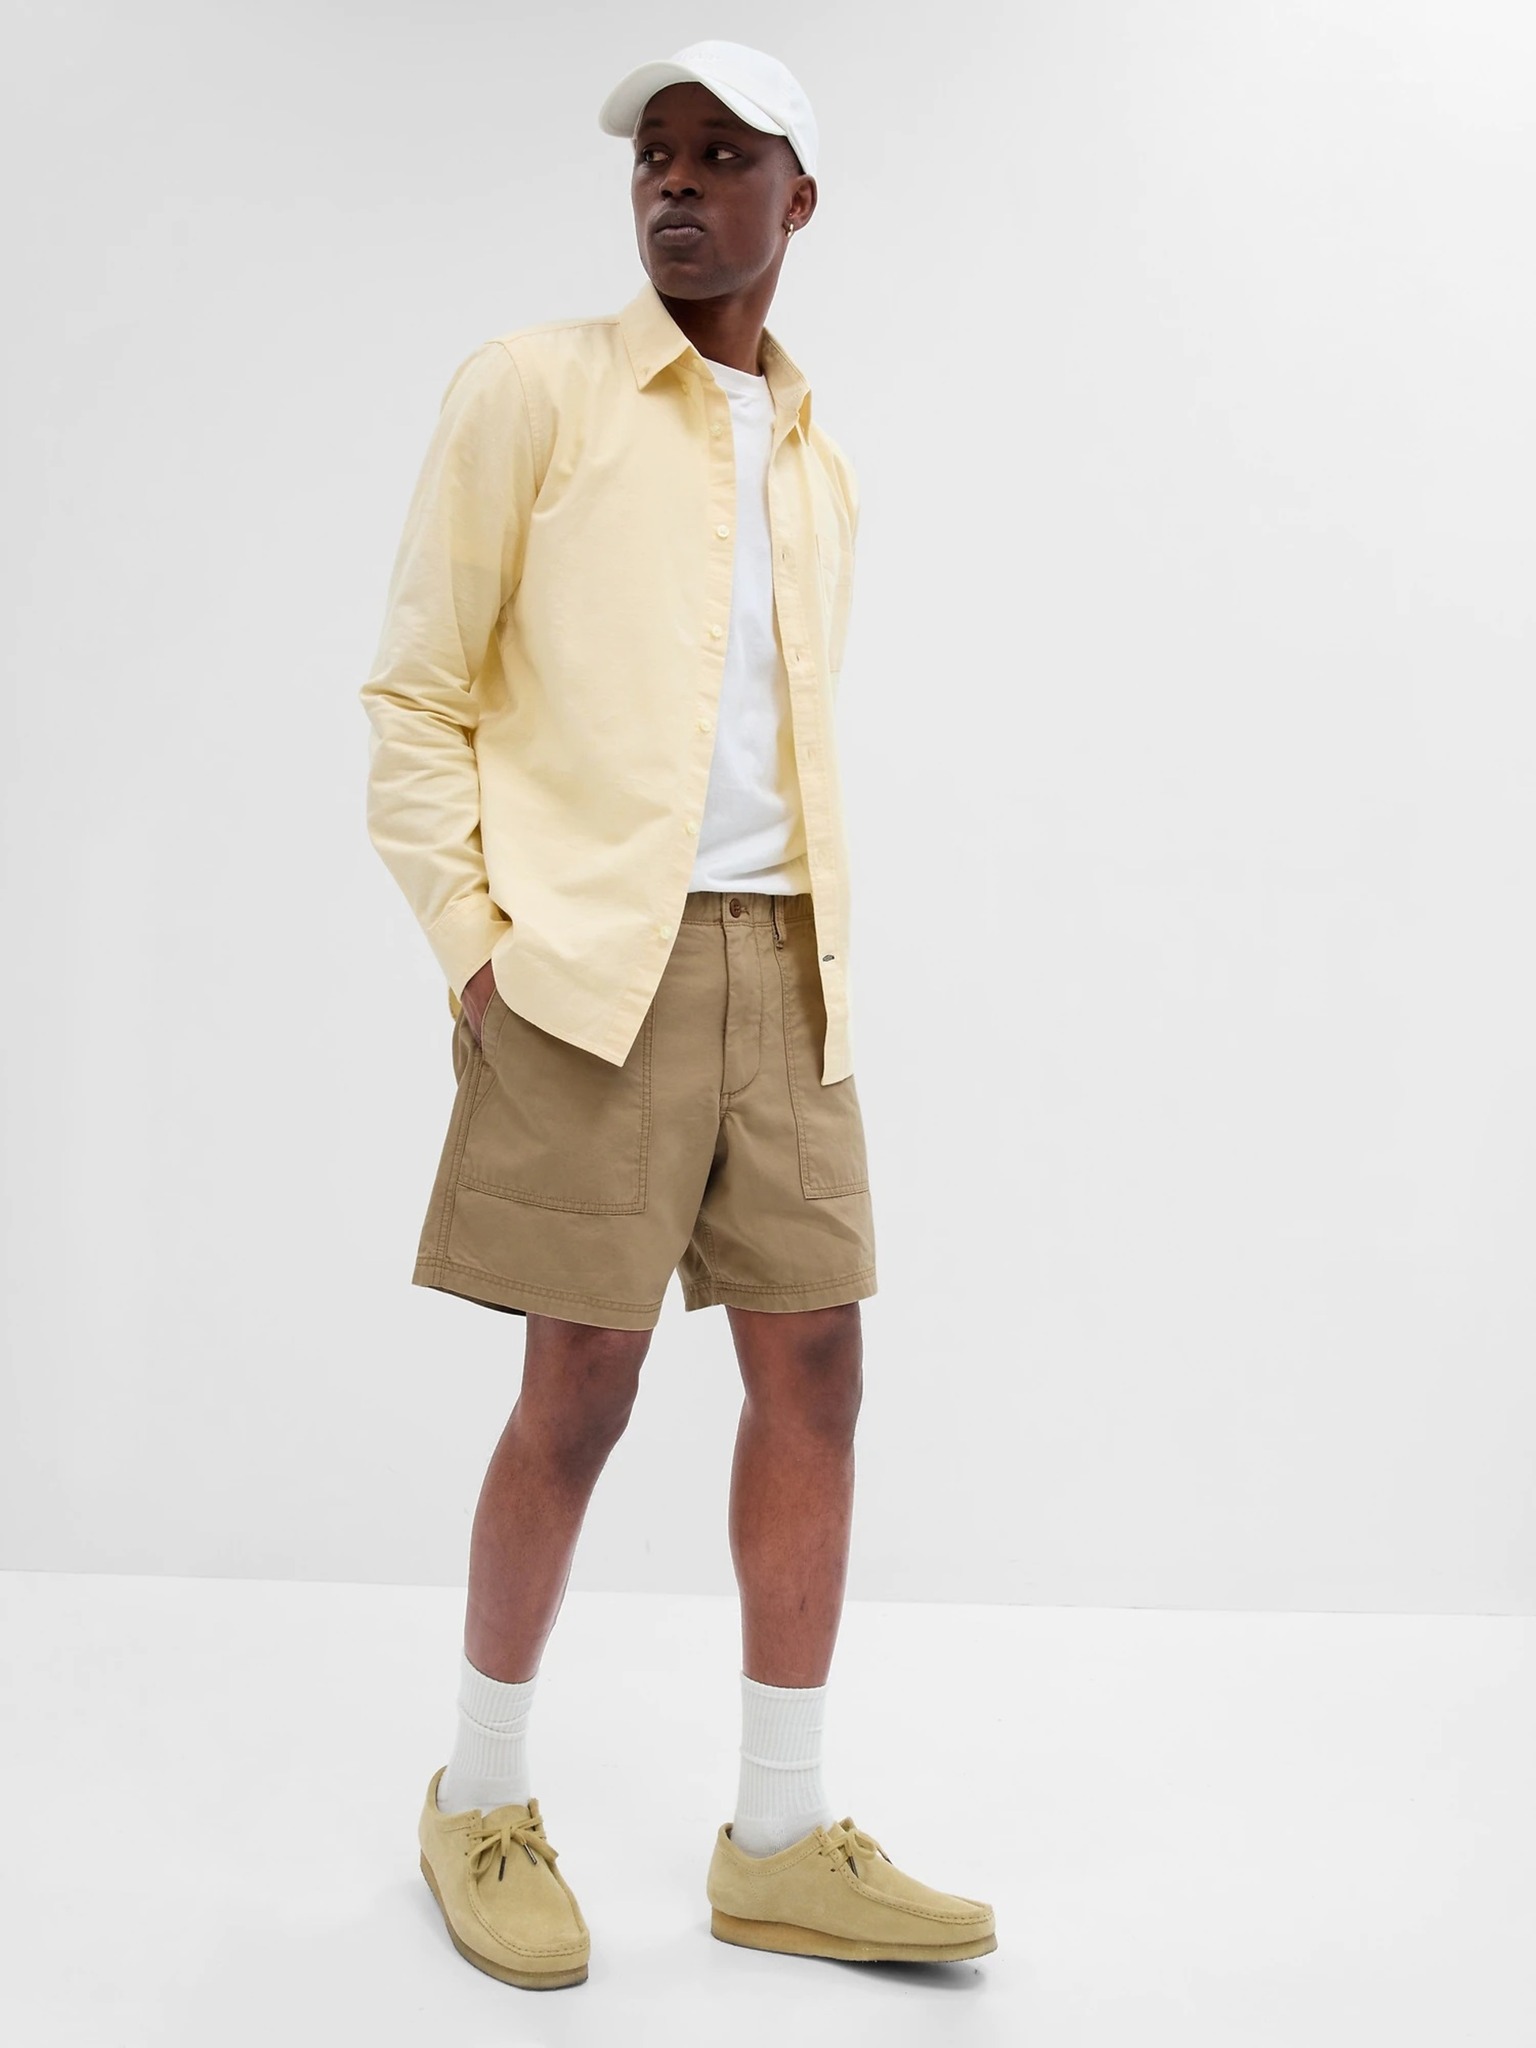 Amazon.com: usnsm Men 2 Piece Outfits,Men's T-Shirt and Shorts Two-Piece  Set Fashion Print Short Sleeve Casual Shirt Short Pants Outfits : Sports &  Outdoors